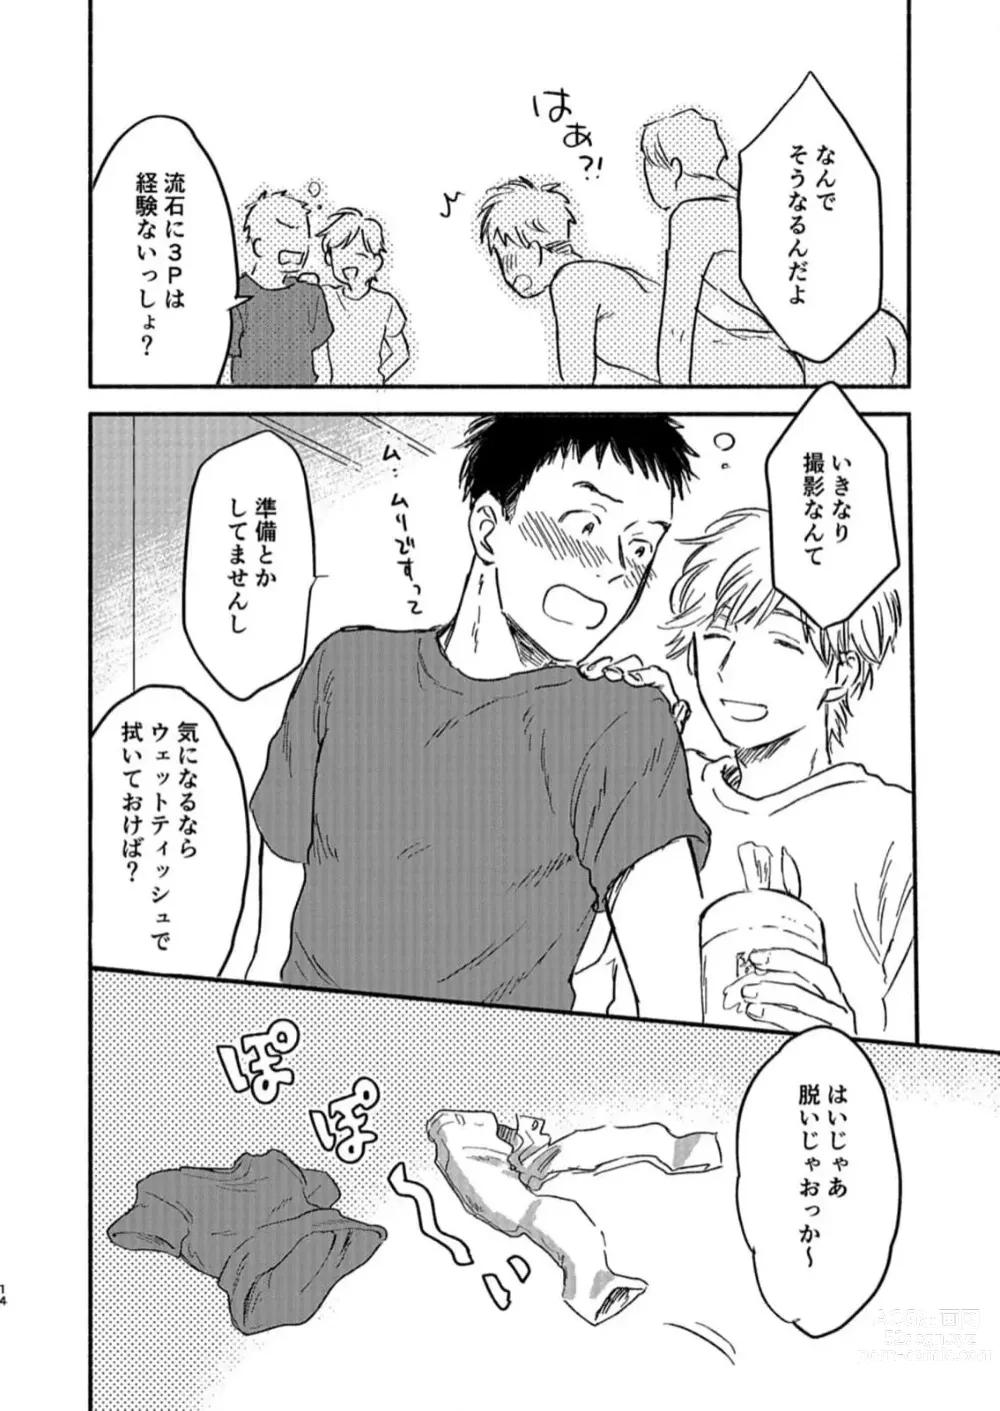 Page 14 of doujinshi Toaru GayVi Seisaku Gaisha Staff no Shanai Renai Jijou - The internal love affairs of the staff of a certain gay video production company.